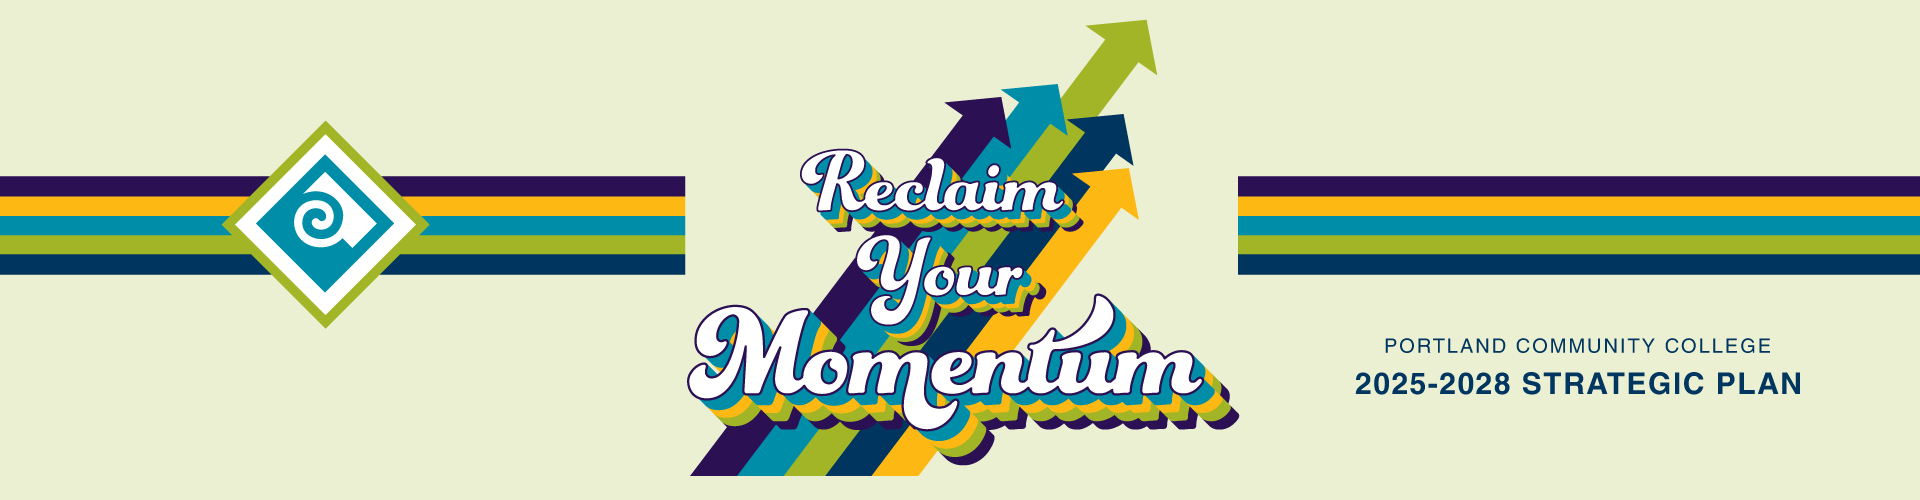 Reclaim Your Momentum: 2025-2028 Strategic Plan